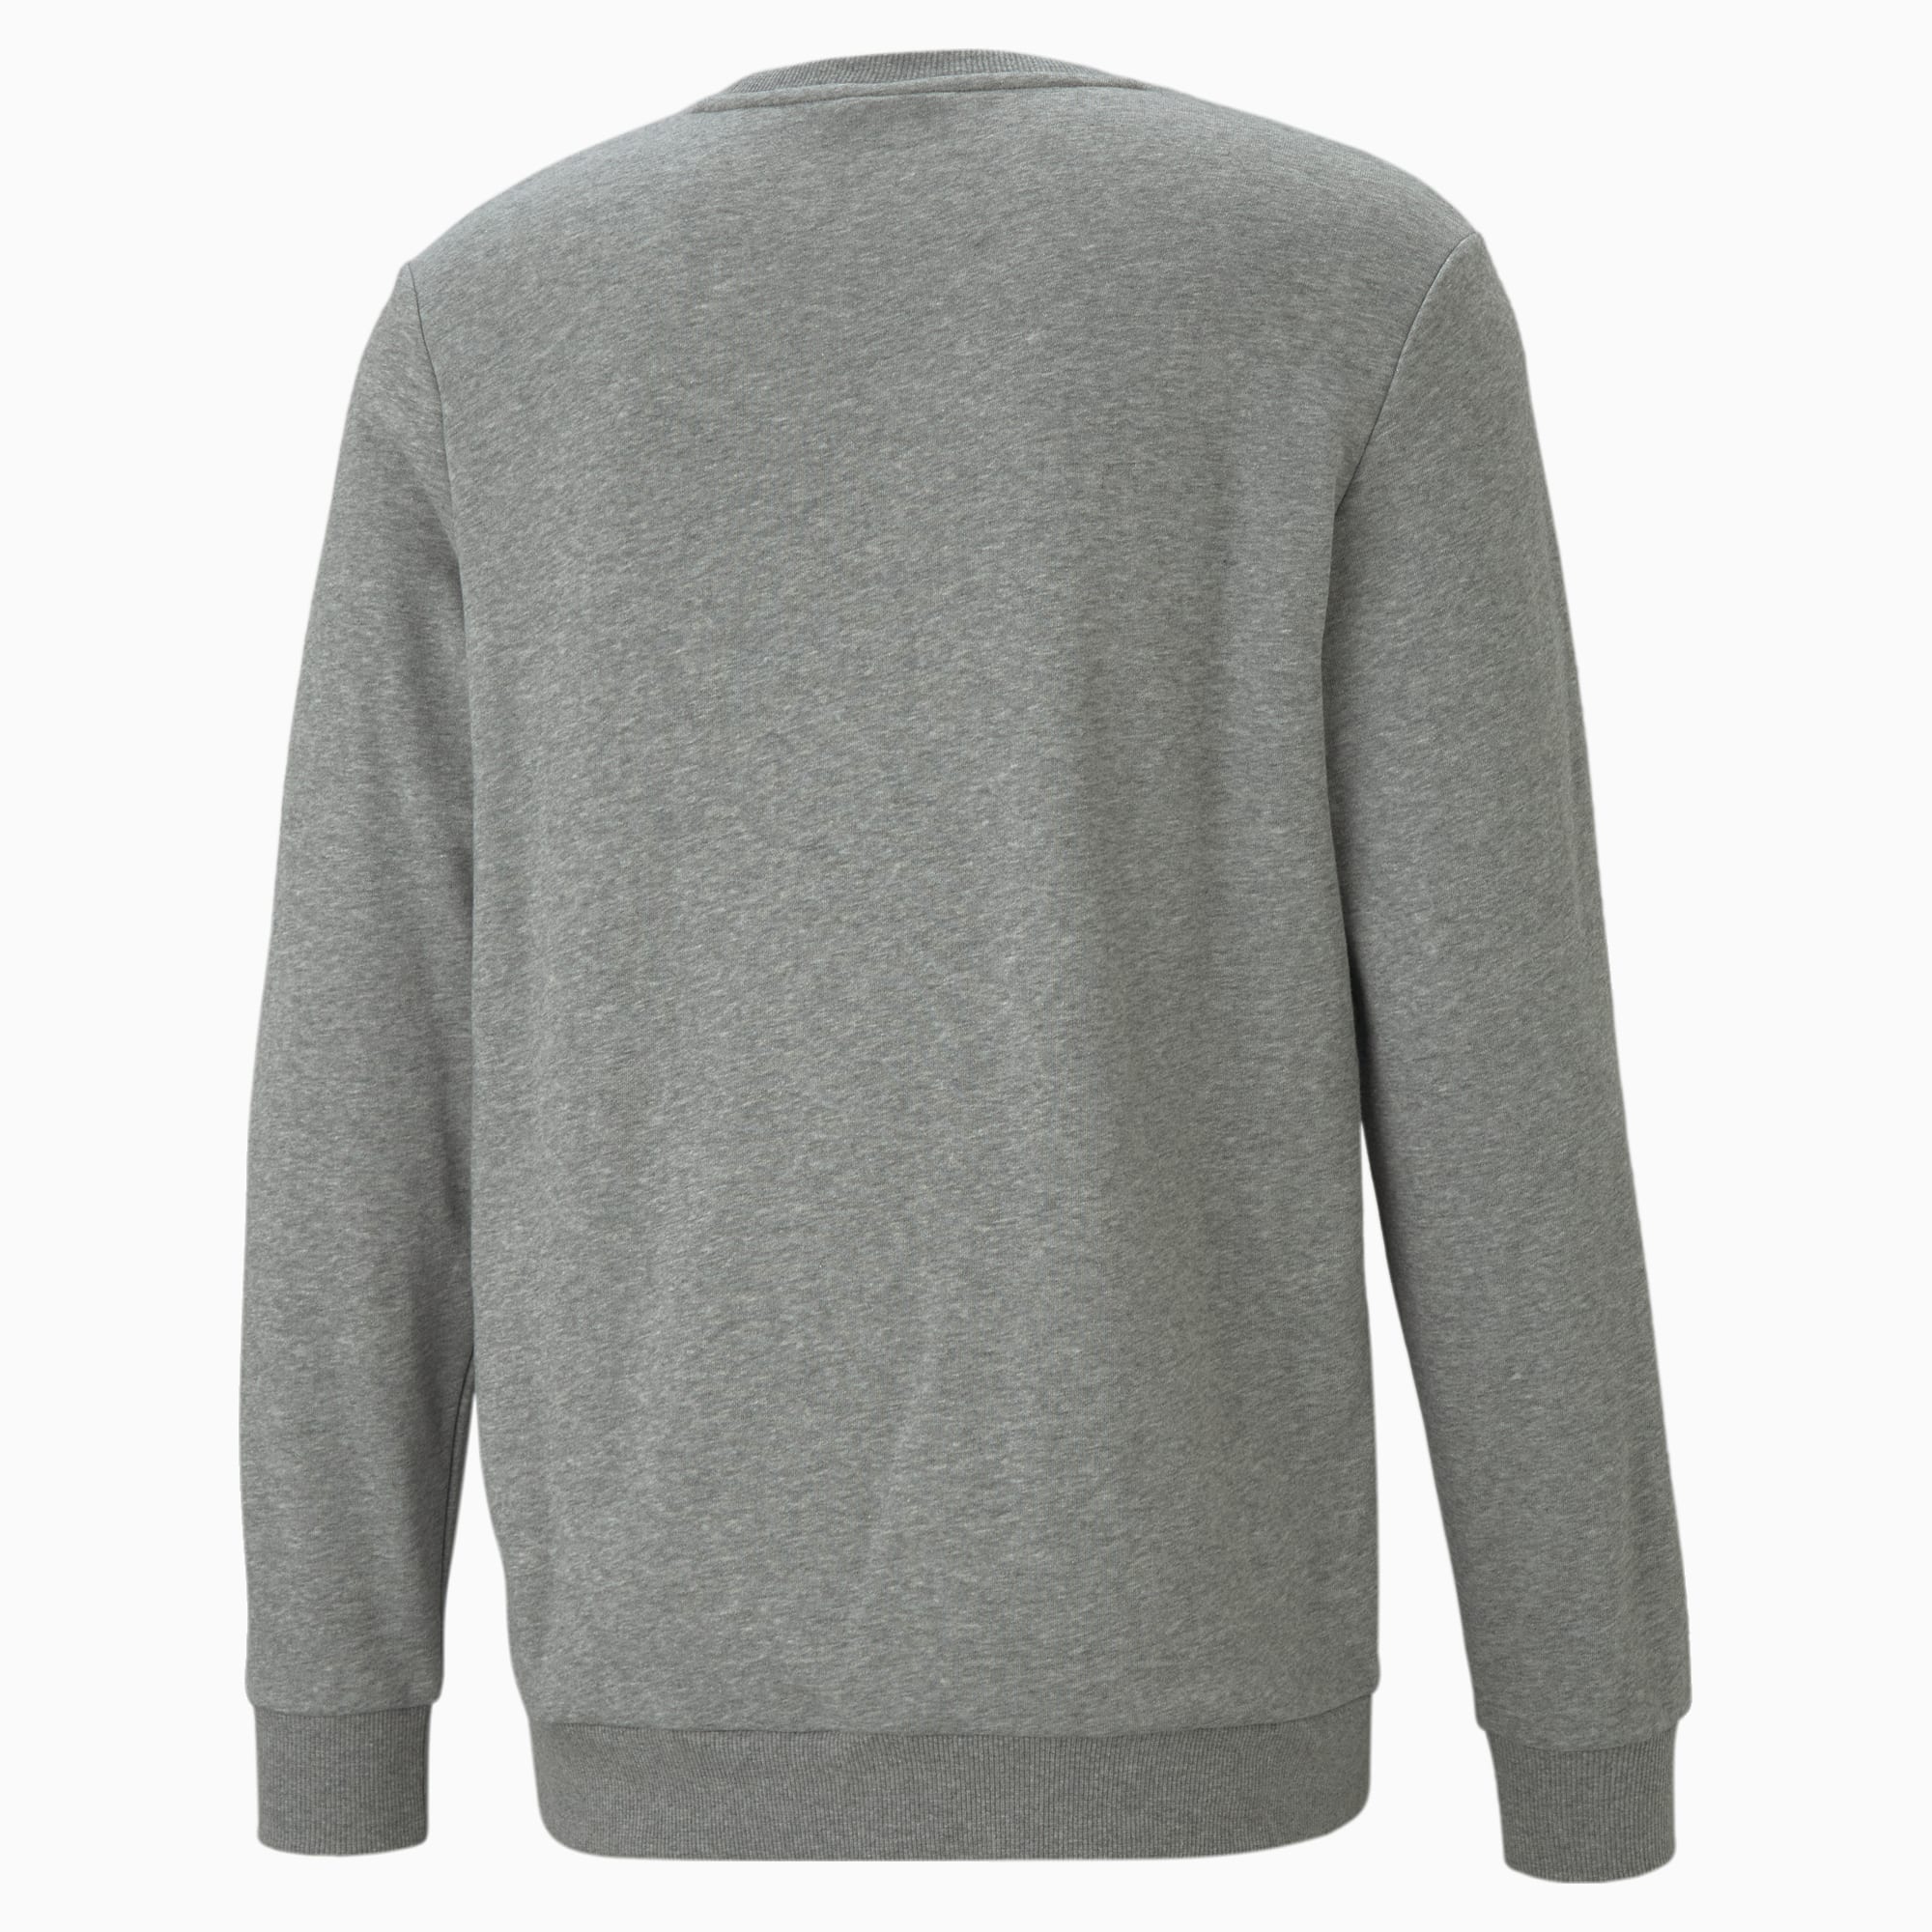 PUMA Essentials Big Logo Crew Men's Sweater Shirt, Medium Grey Heather, Size XS, Clothing